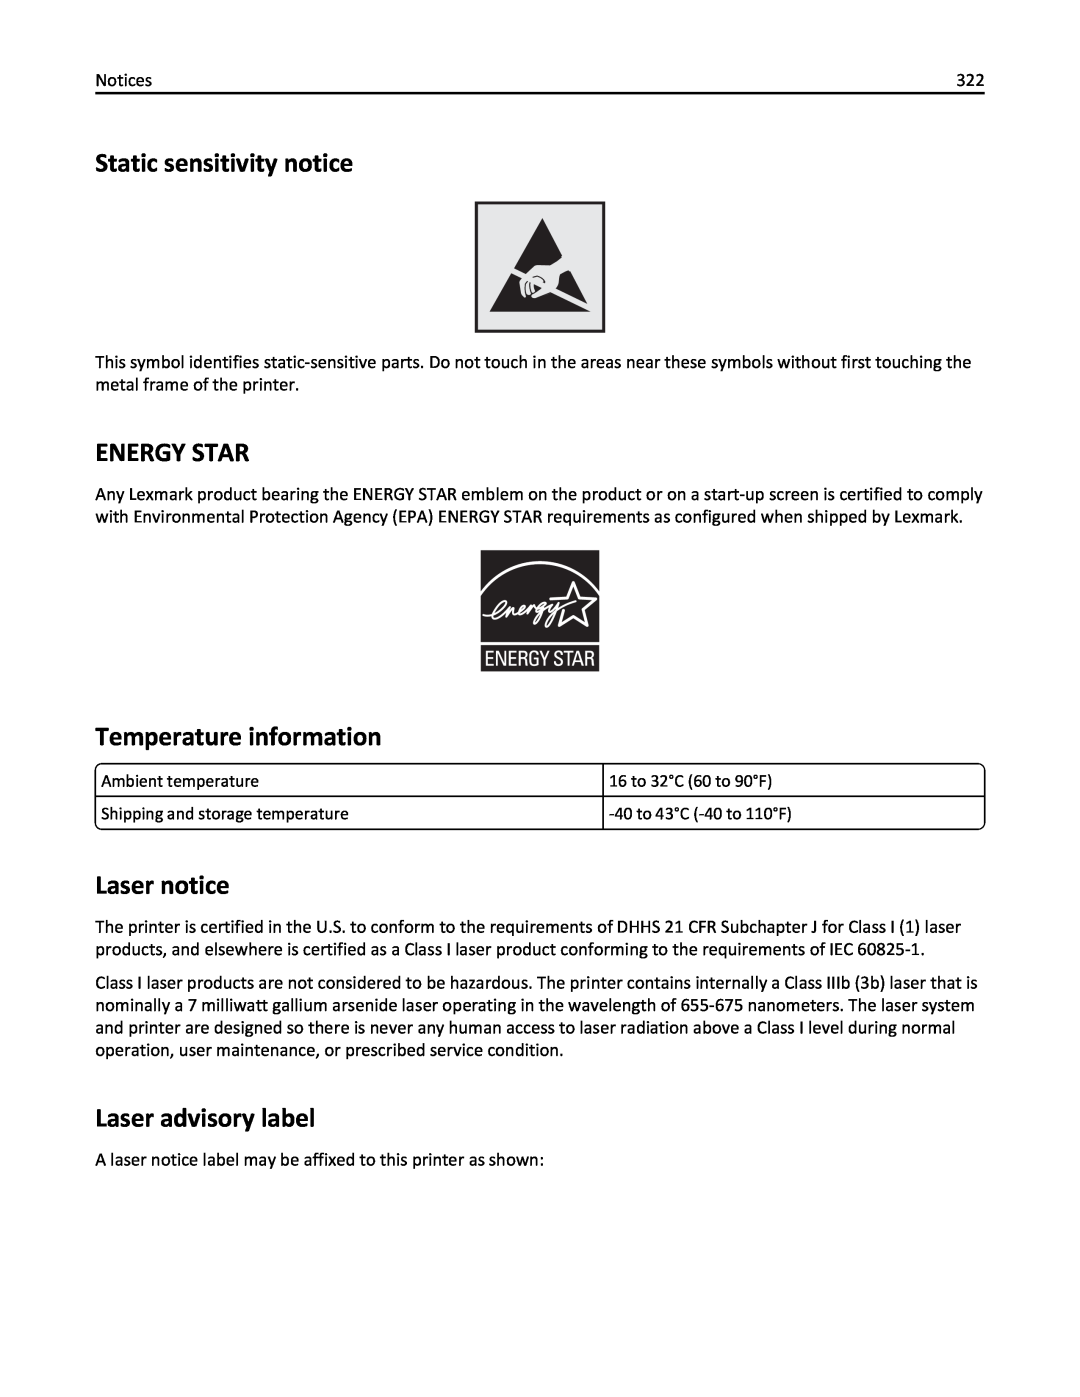 Lexmark 436 manual Static sensitivity notice, Energy Star, Temperature information, Laser notice, Laser advisory label 